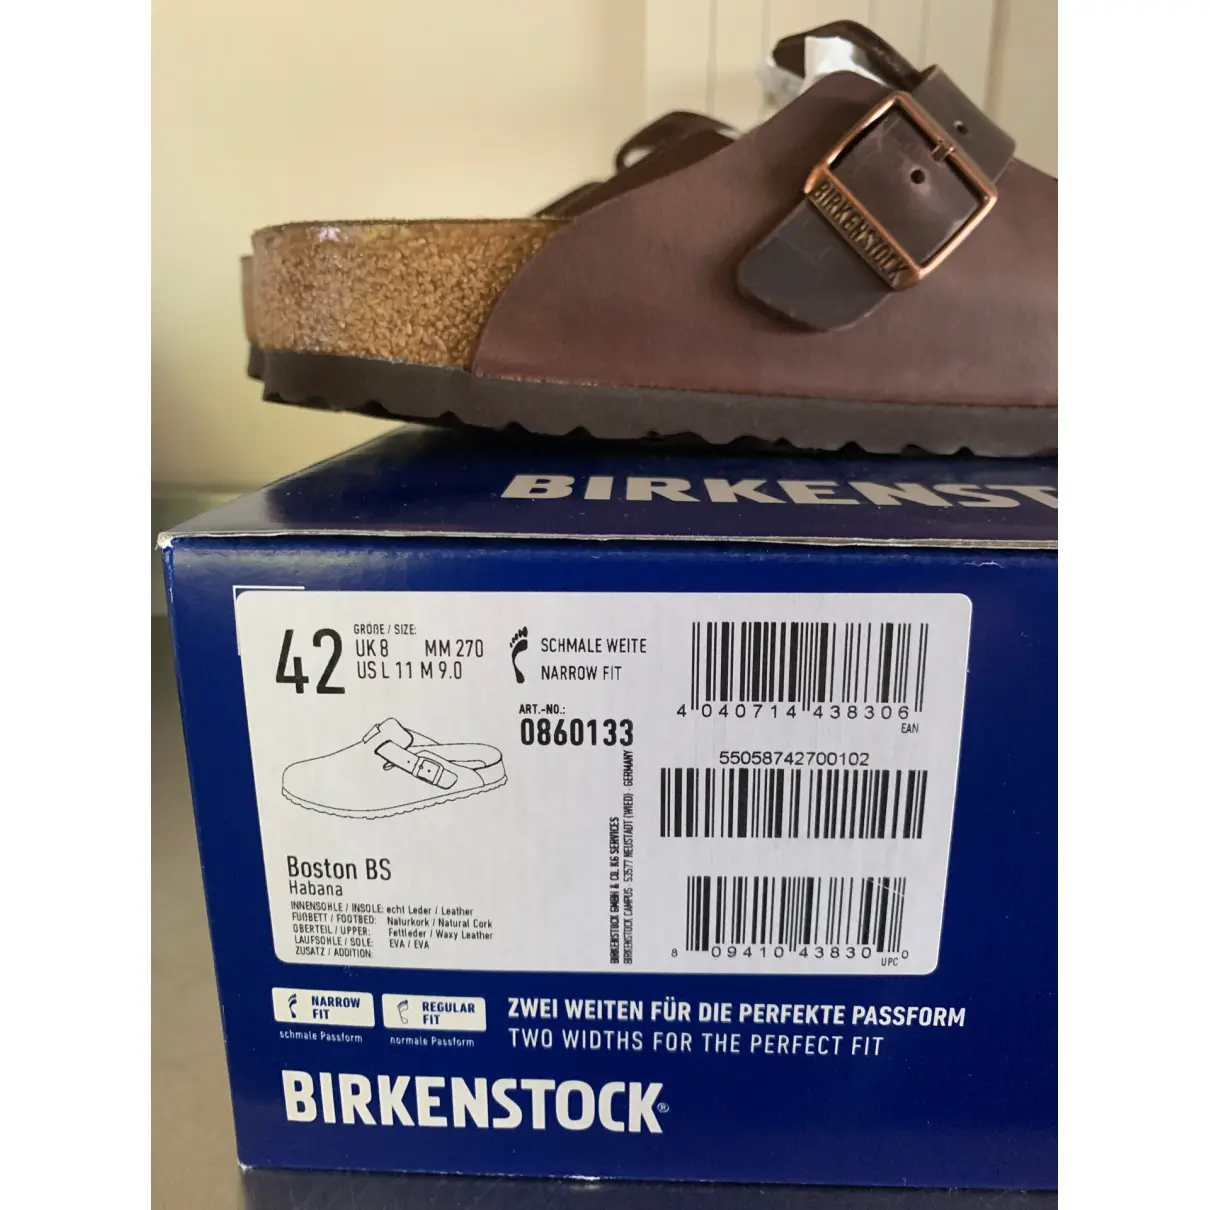 Leather sandals Birkenstock